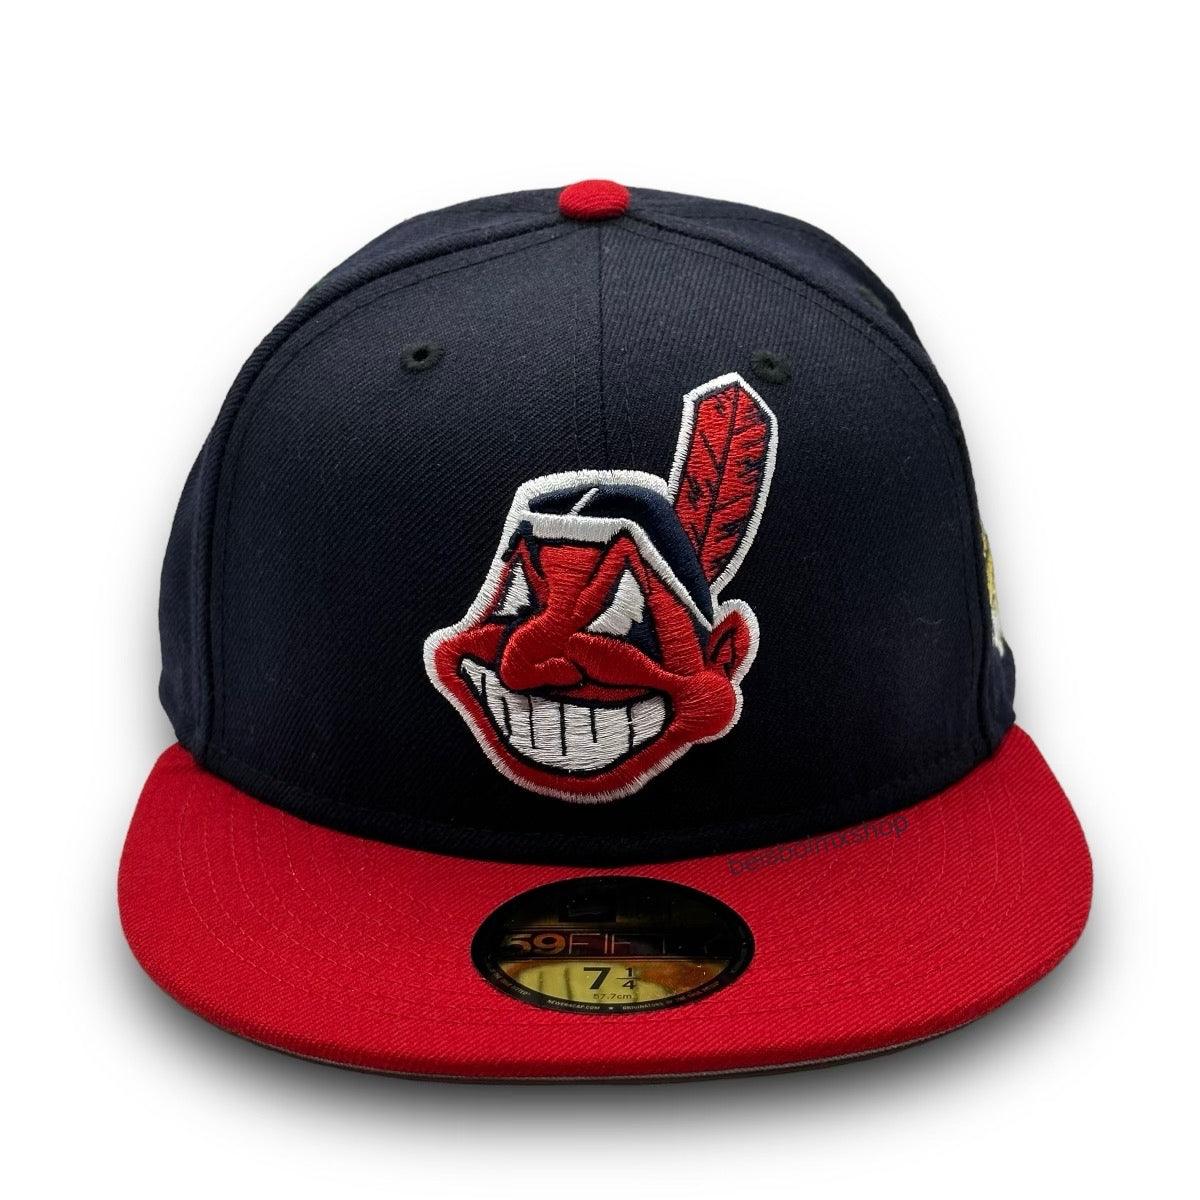 Cleveland Indians wahoo hat - BeisbolMXShop